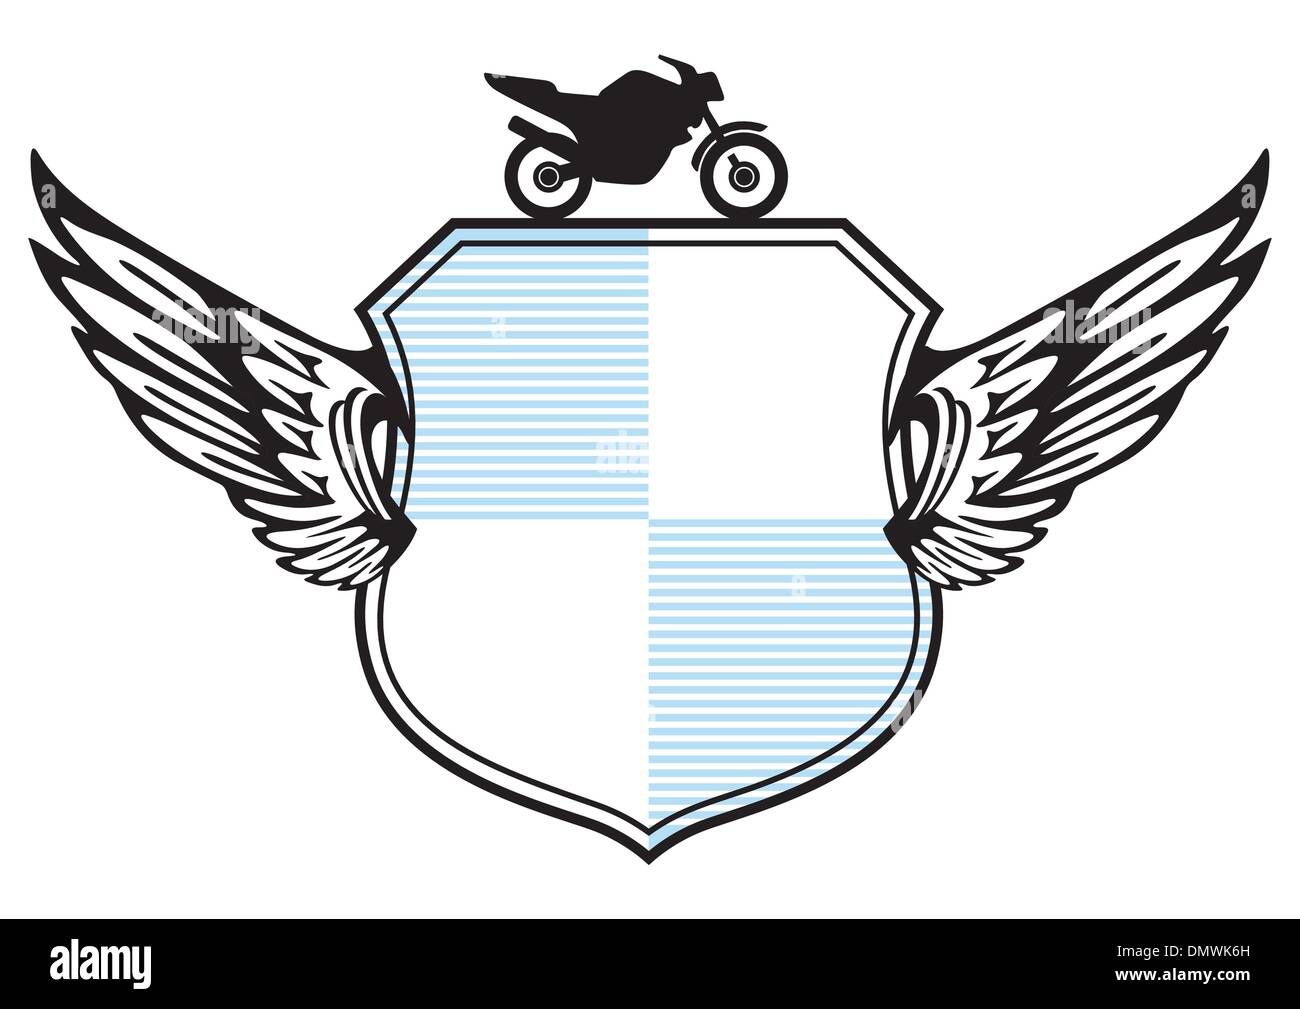 Motorcycle Club Shield Stock Vector